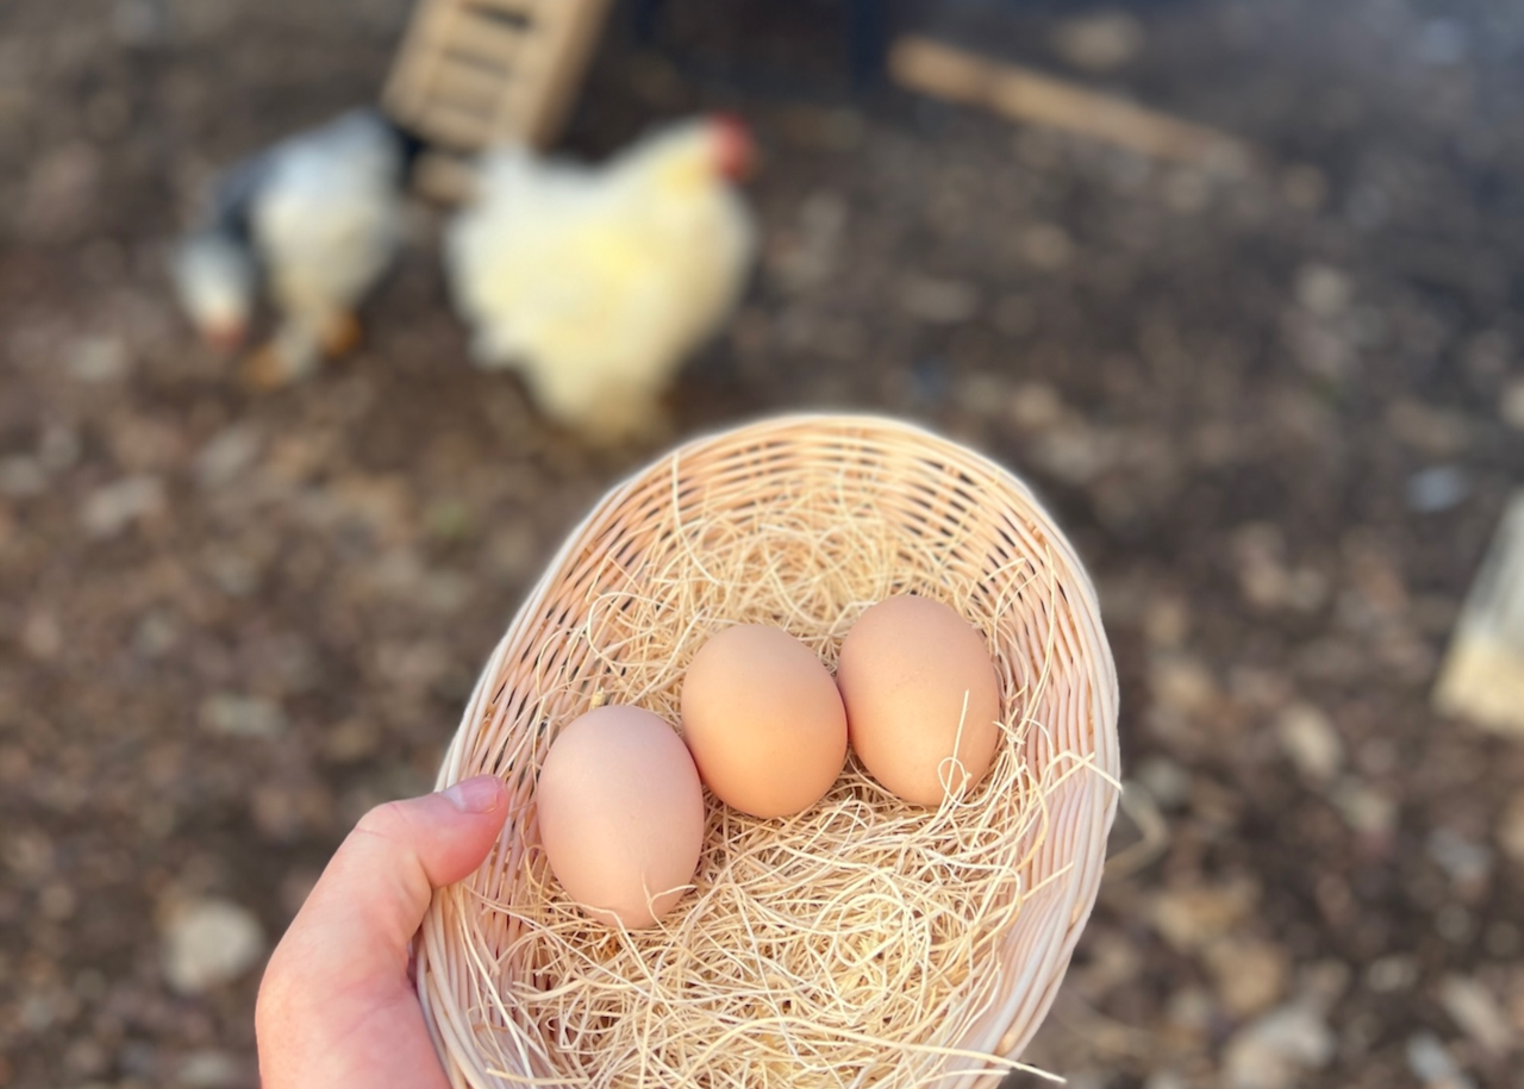 Got Chickens? A New Business Helps Tend to Backyard Flocks